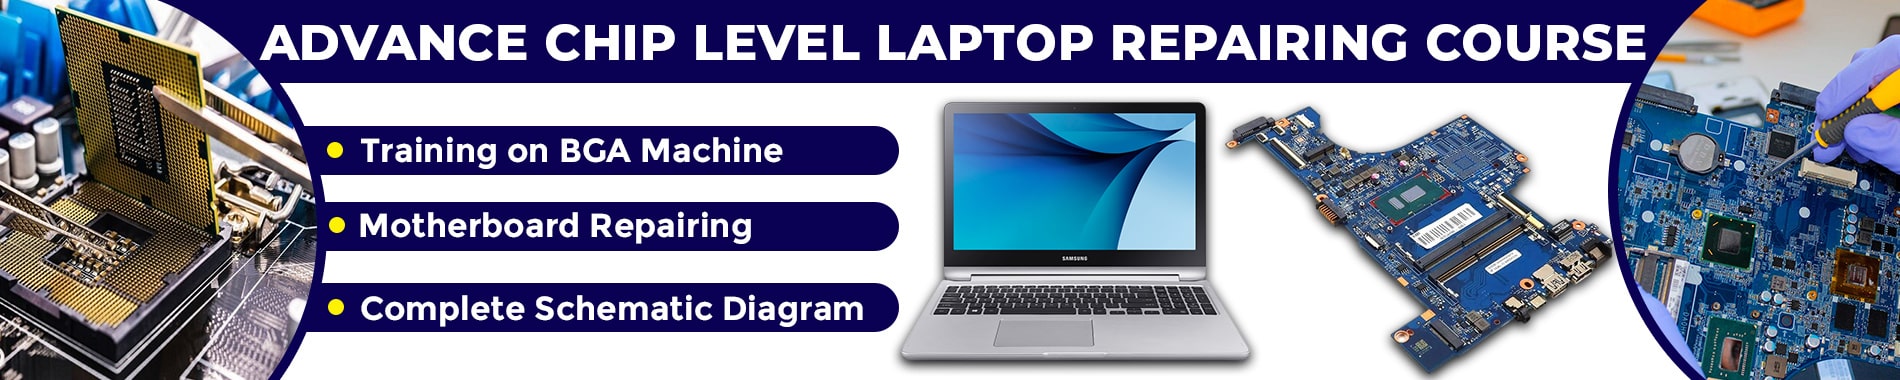 Advance Chip Level Laptop Repairing Course